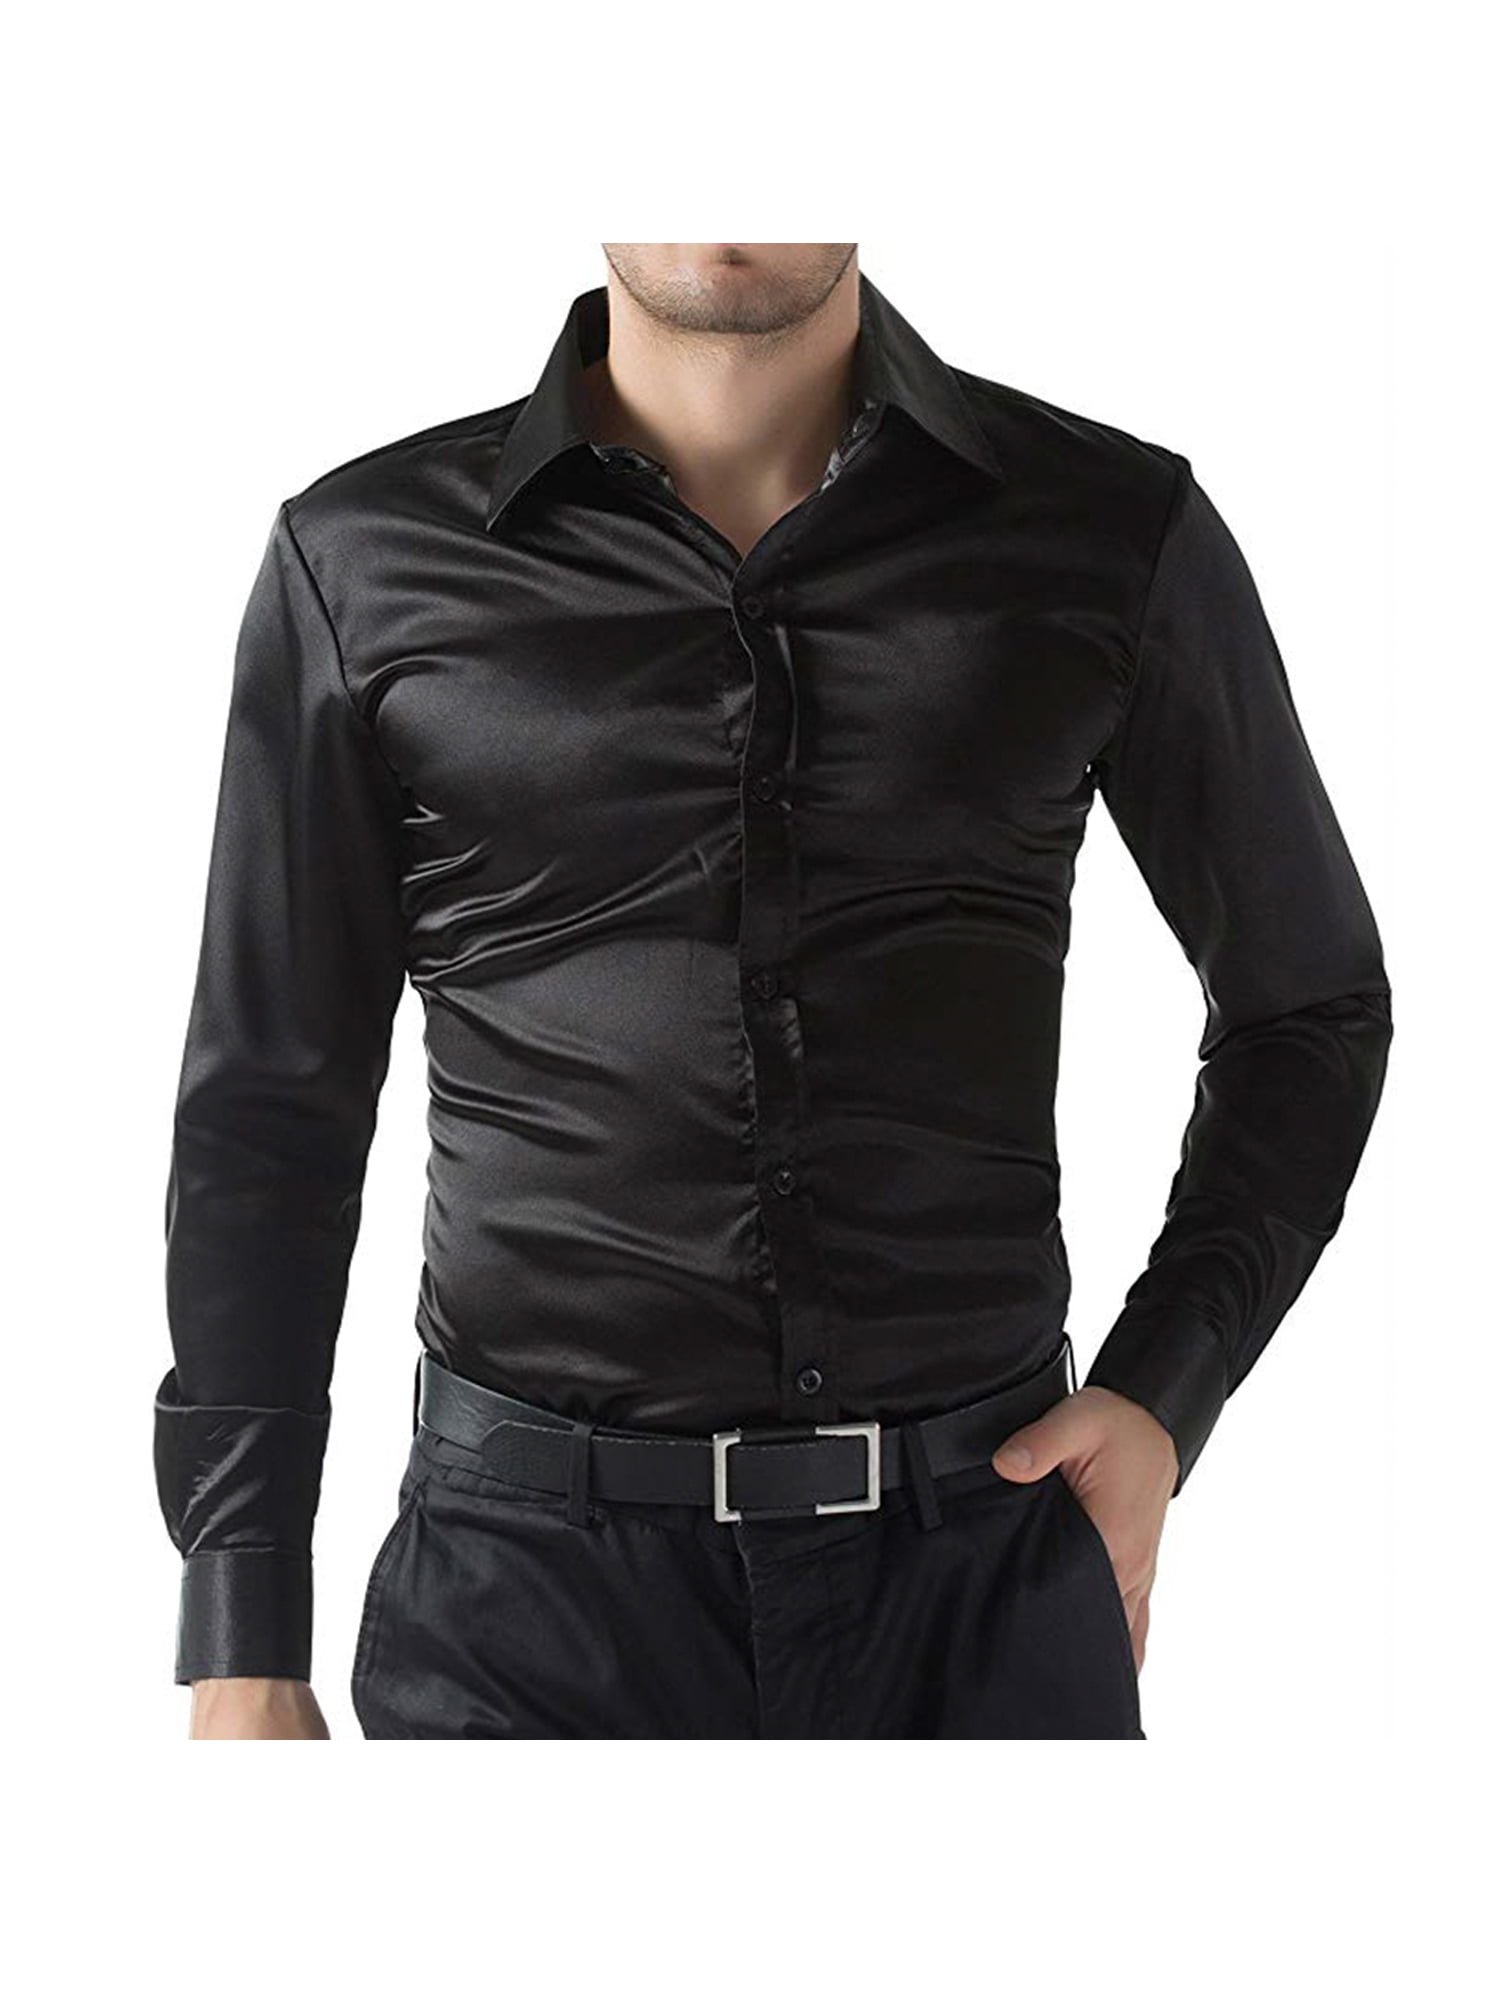 Theshy Luxury Men Shirt Long Sleeve Formal Business Slim Dress Shirt T Shirt Top